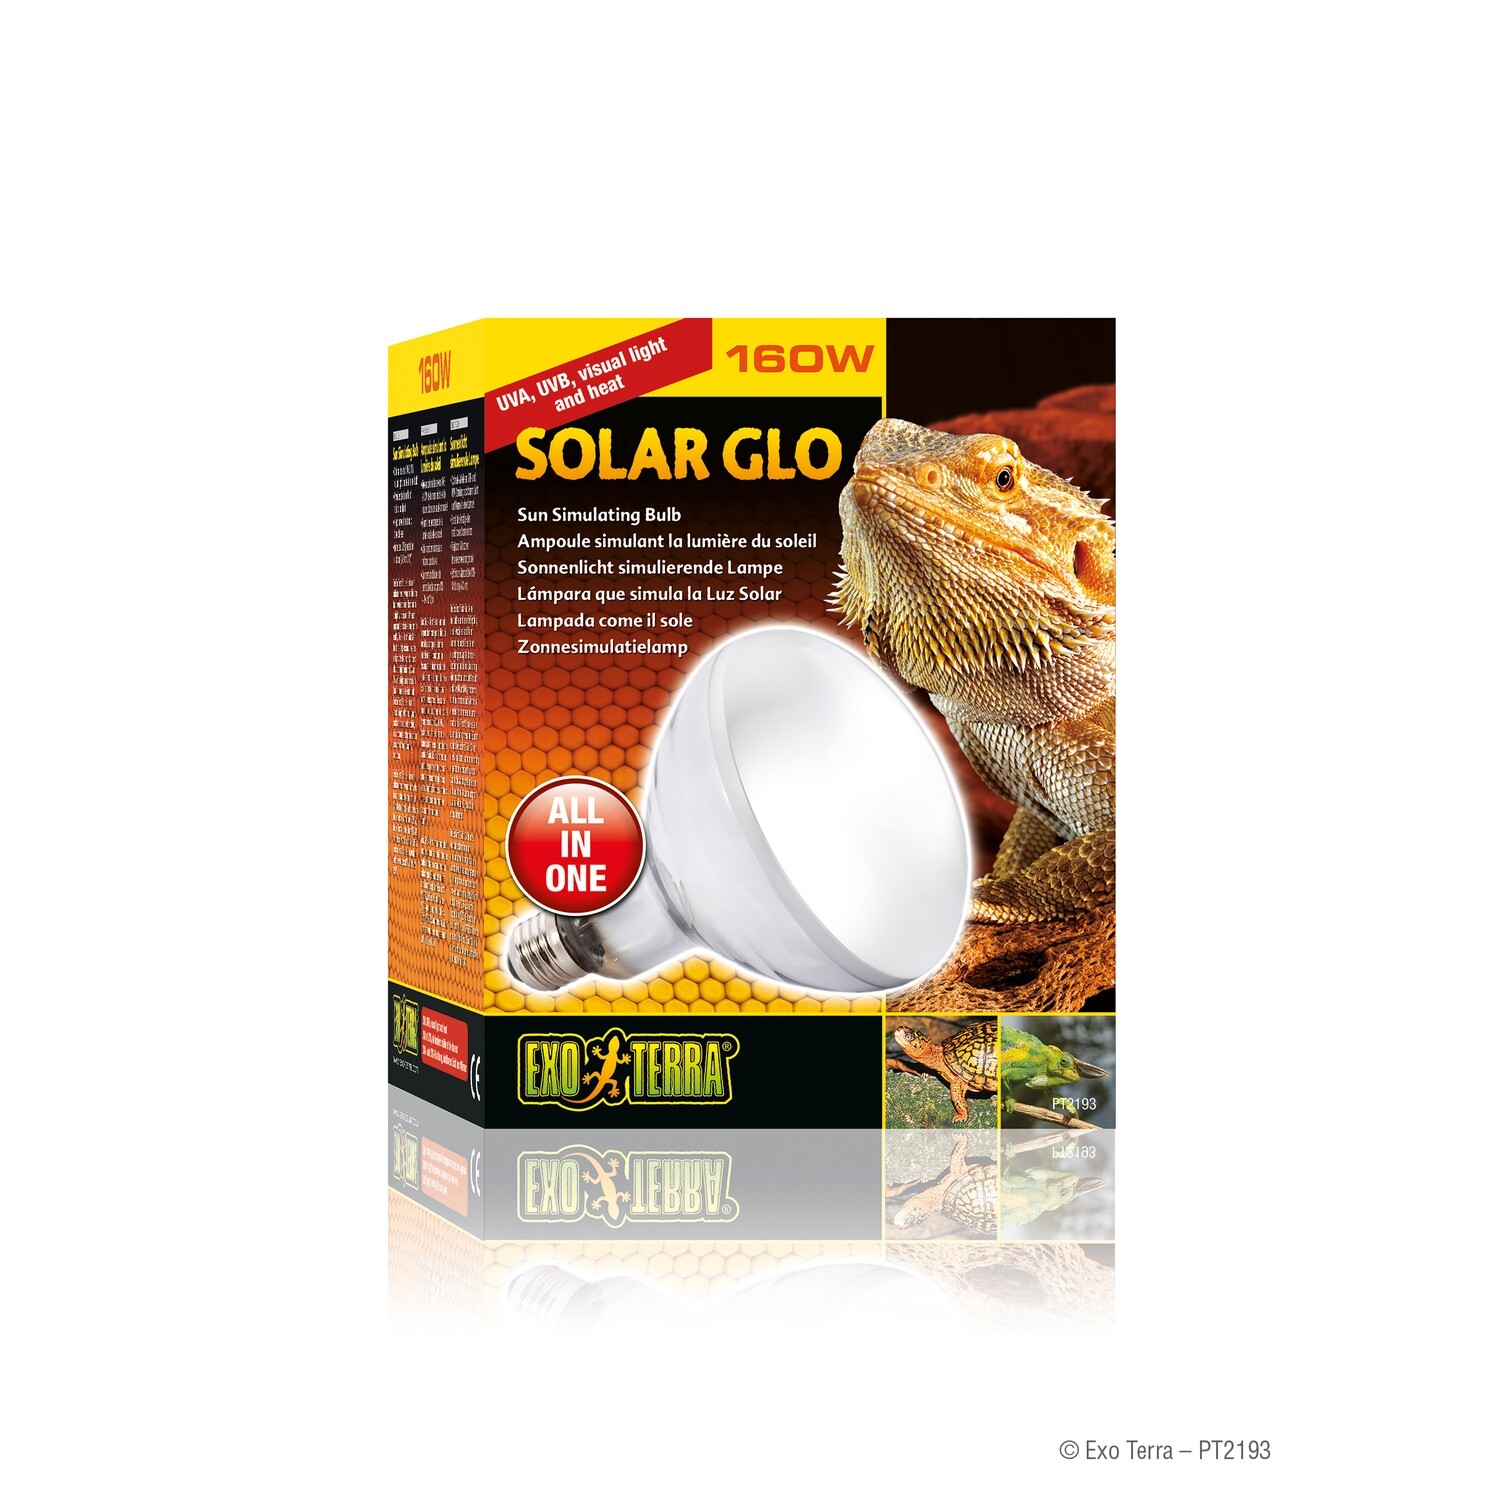 Exo Terra Solar Glo UVB & Heat 160W